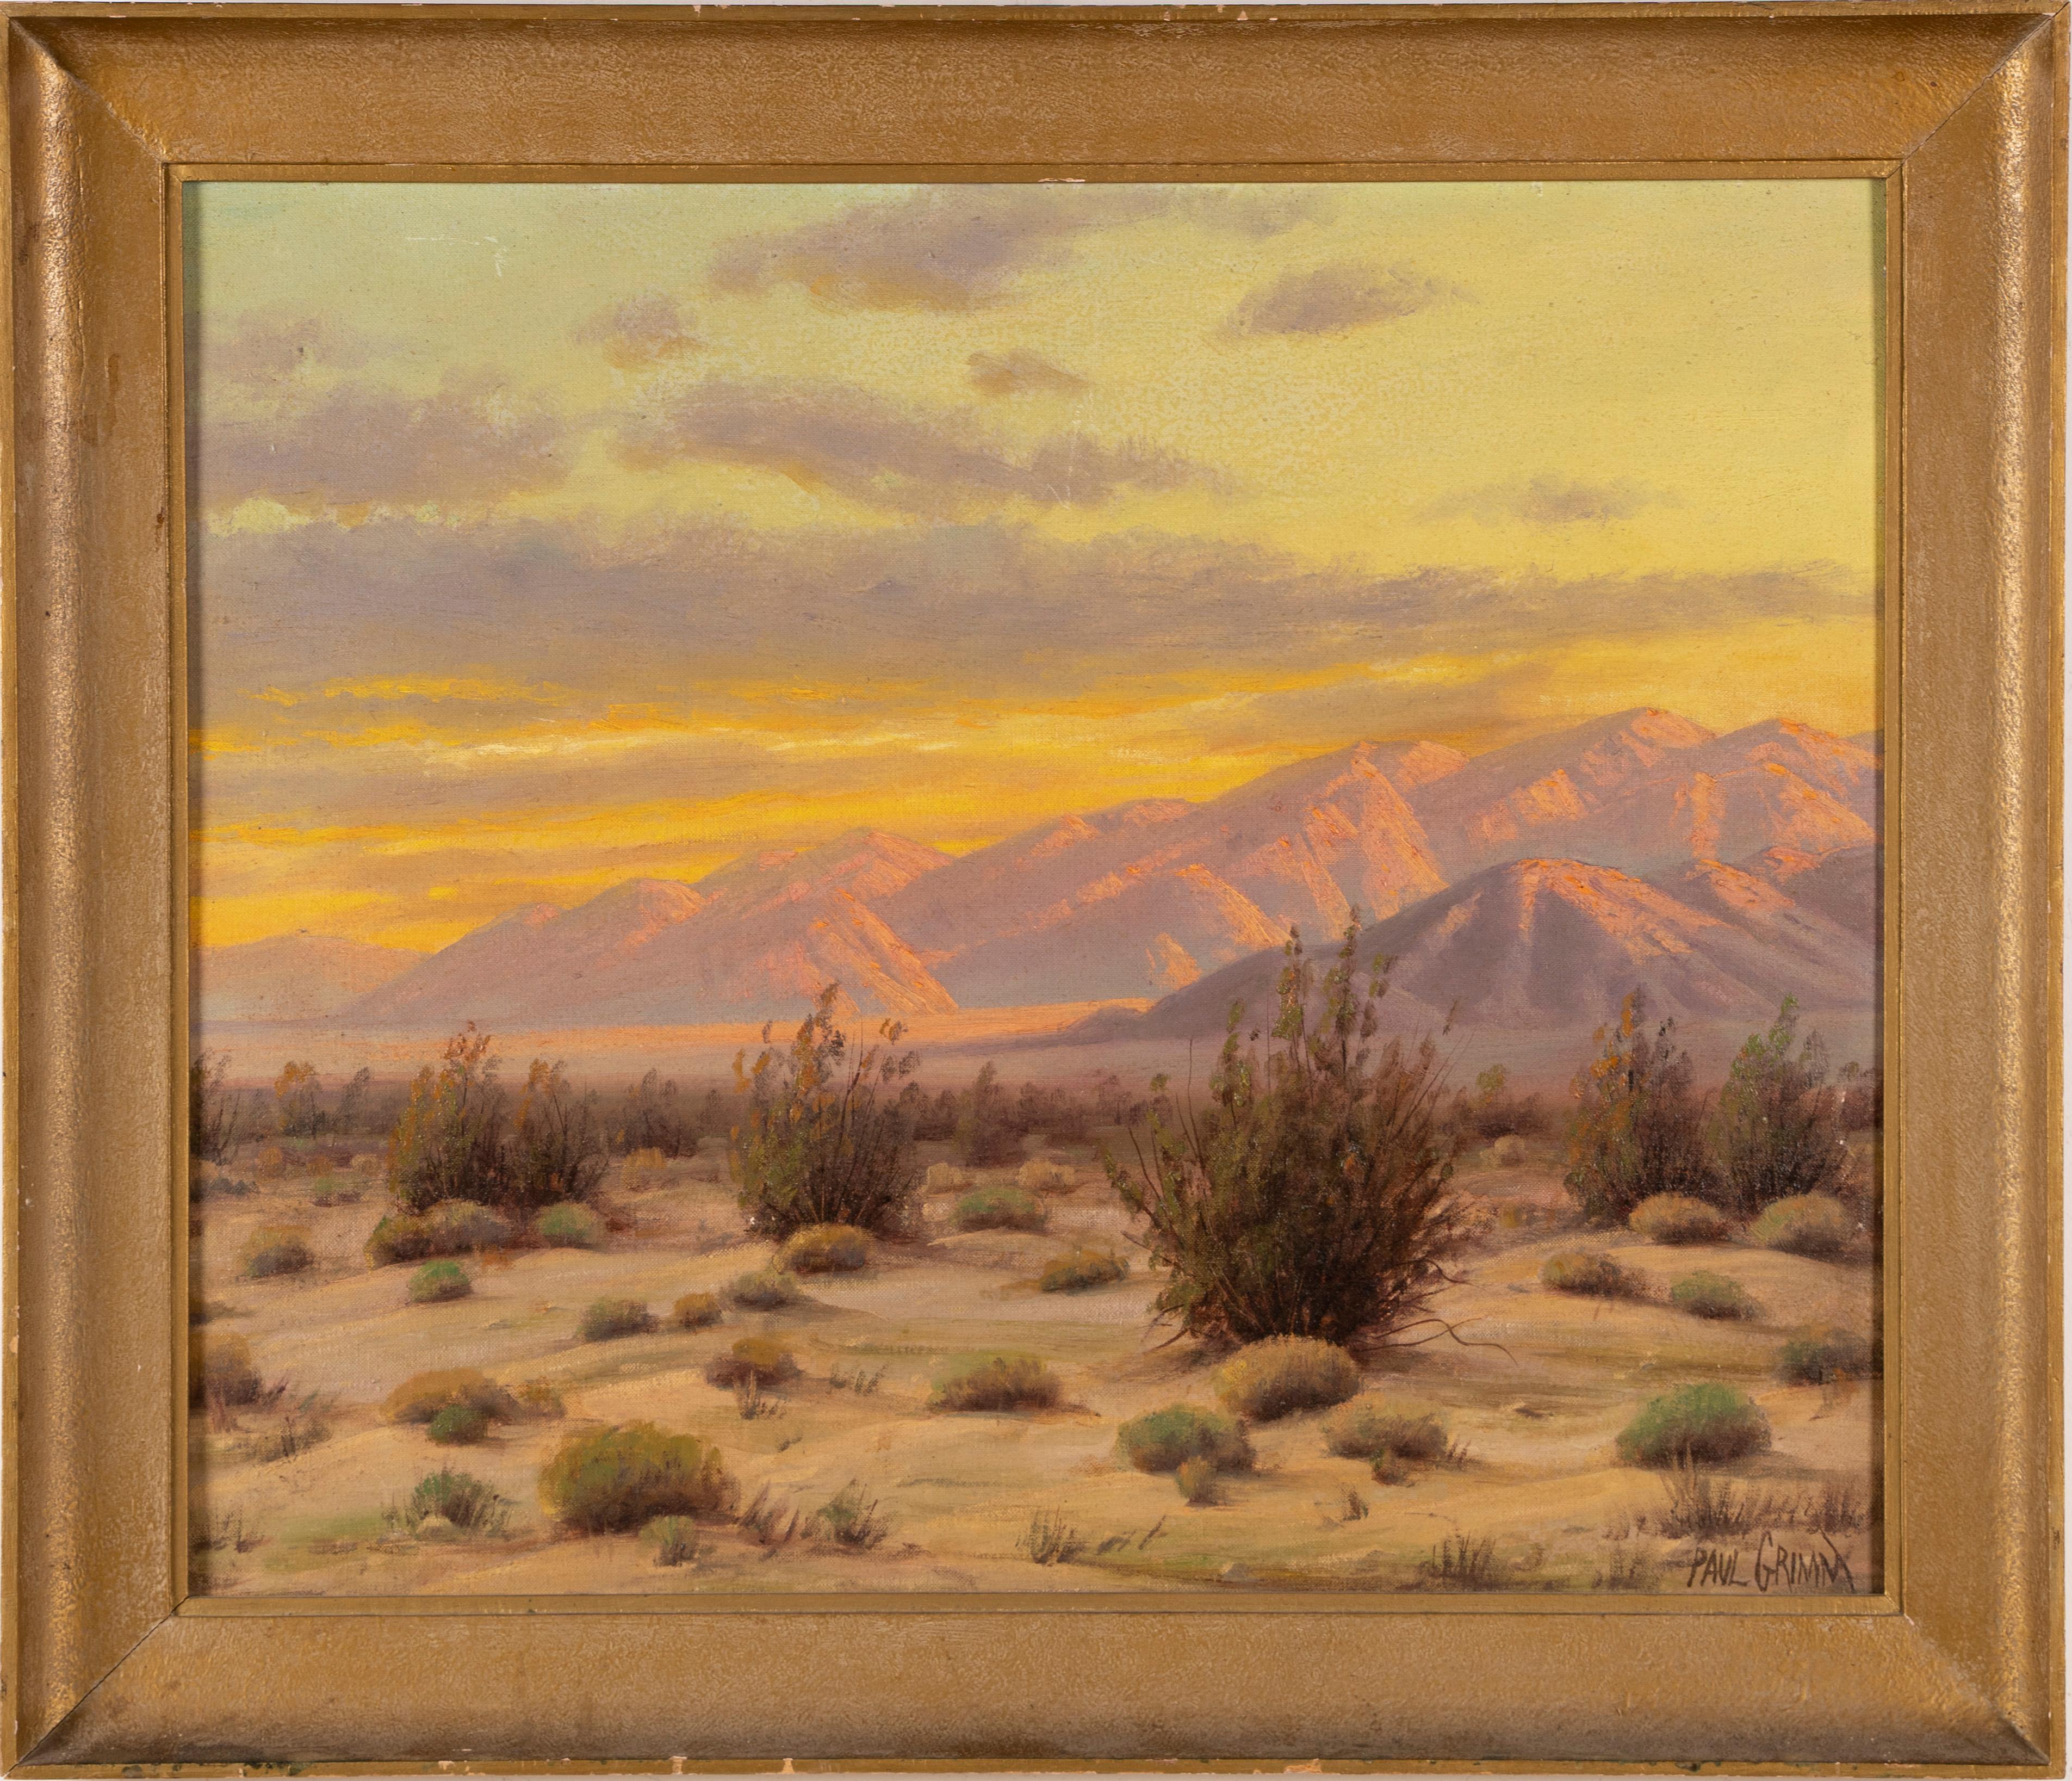 Paul Grimm Landscape Painting - Antique American Western Desert Mountain Sunset Signed Original Oil Painting